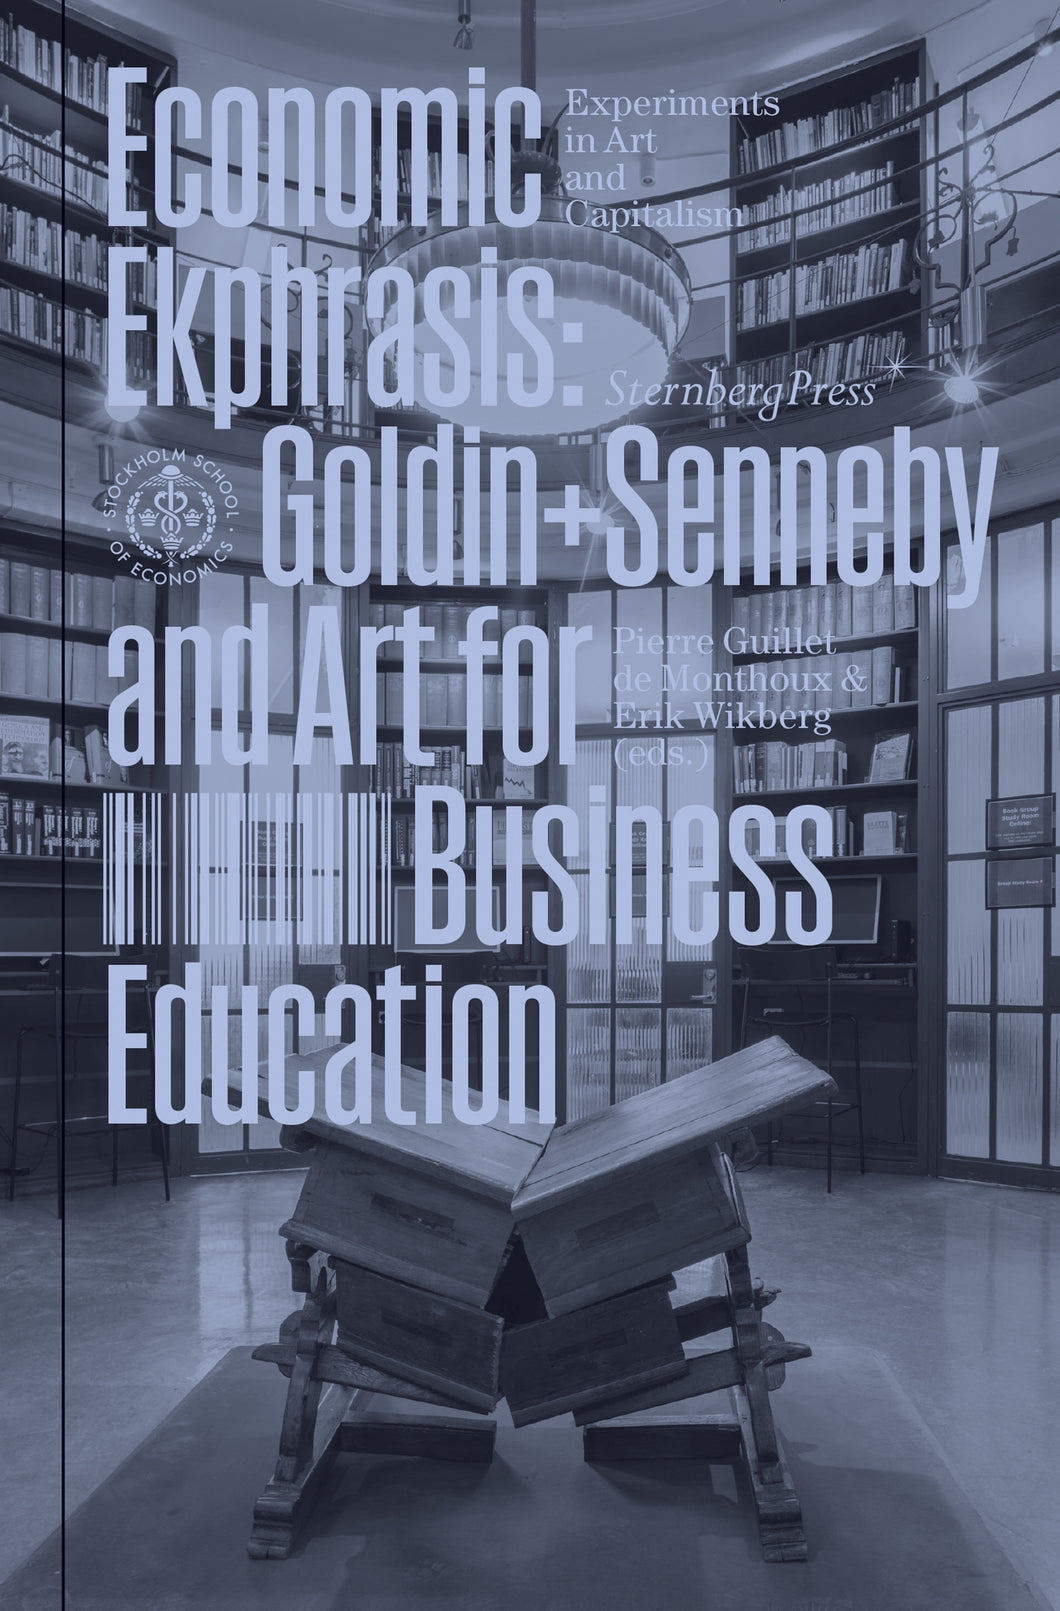 Economic Ekphrasis : Goldin+Senneby and Art for Business Education ร้านหนังสือและสิ่งของ เป็นร้านหนังสือภาษาอังกฤษหายาก และร้านกาแฟ หรือ บุ๊คคาเฟ่ ตั้งอยู่สุขุมวิท กรุงเทพ